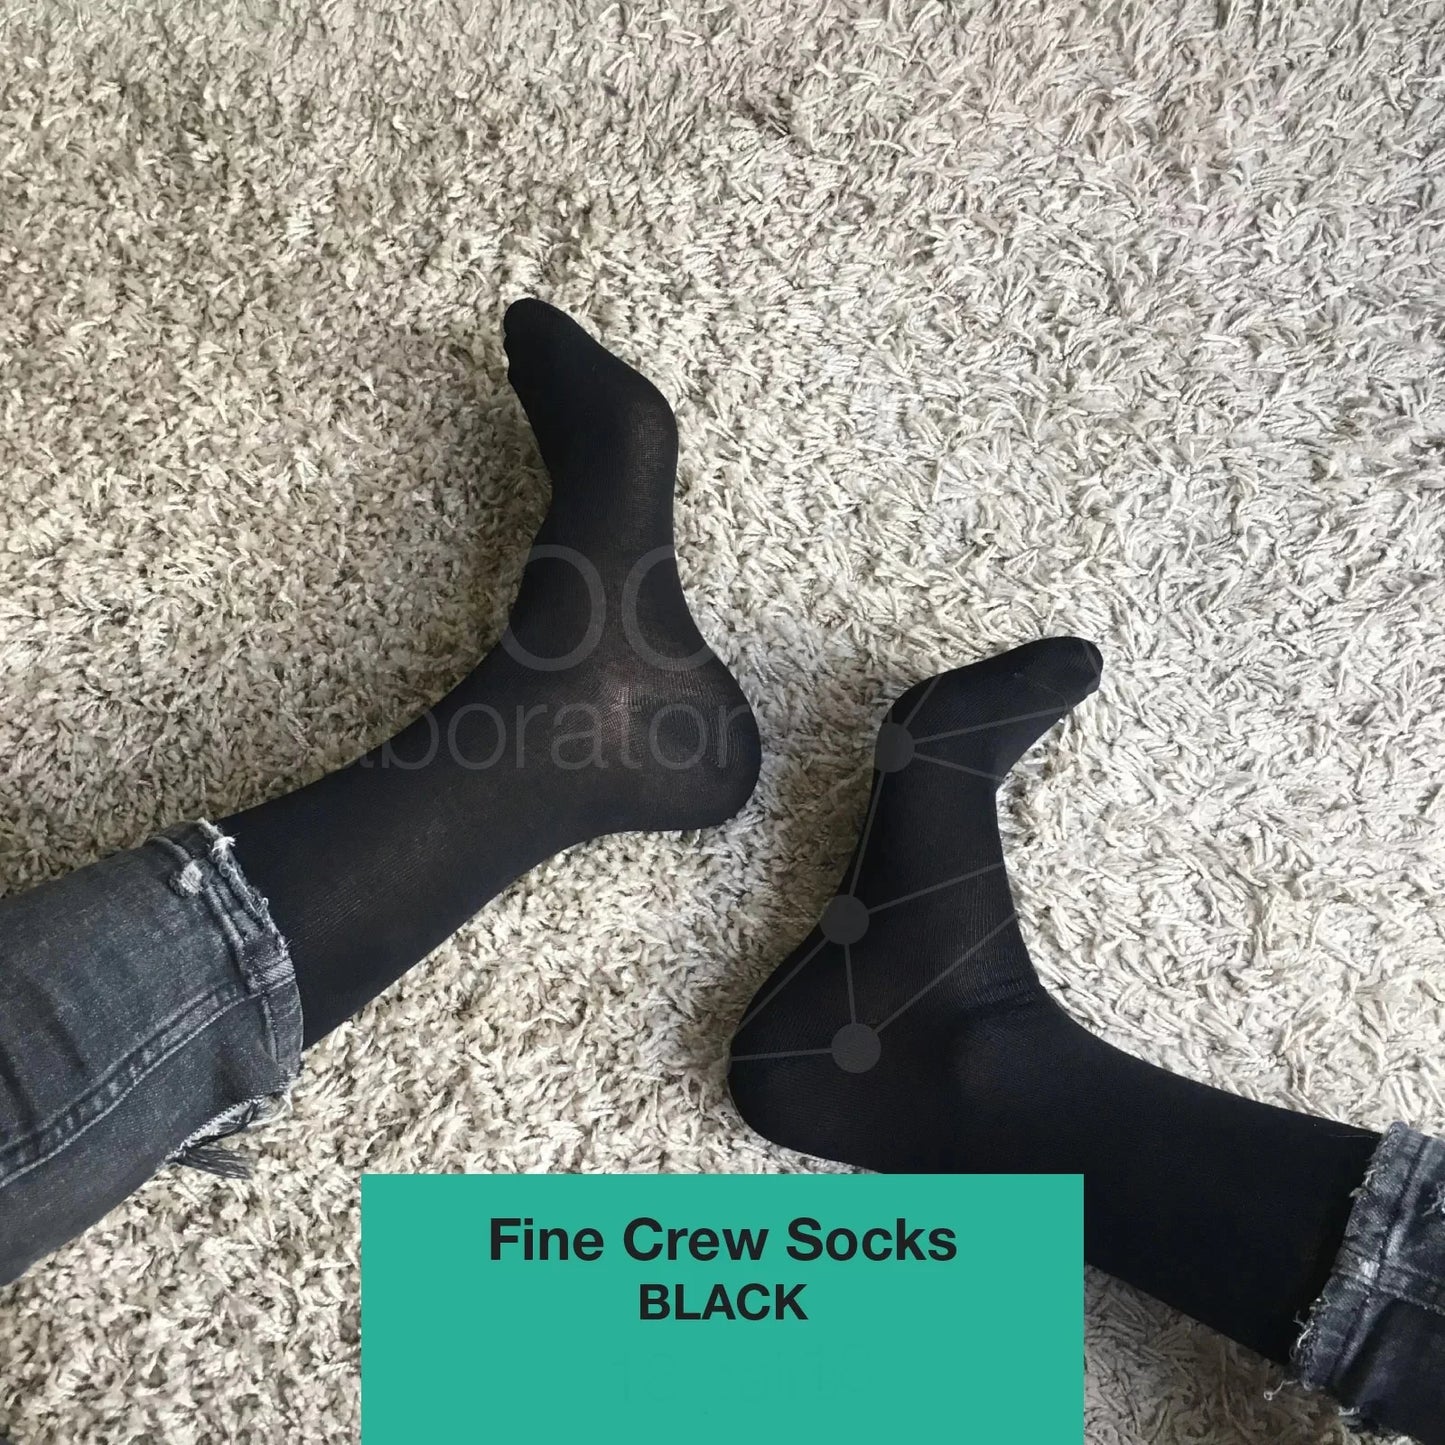 FINE CREW SOCKS - Set of 3 / The Fine Blacks